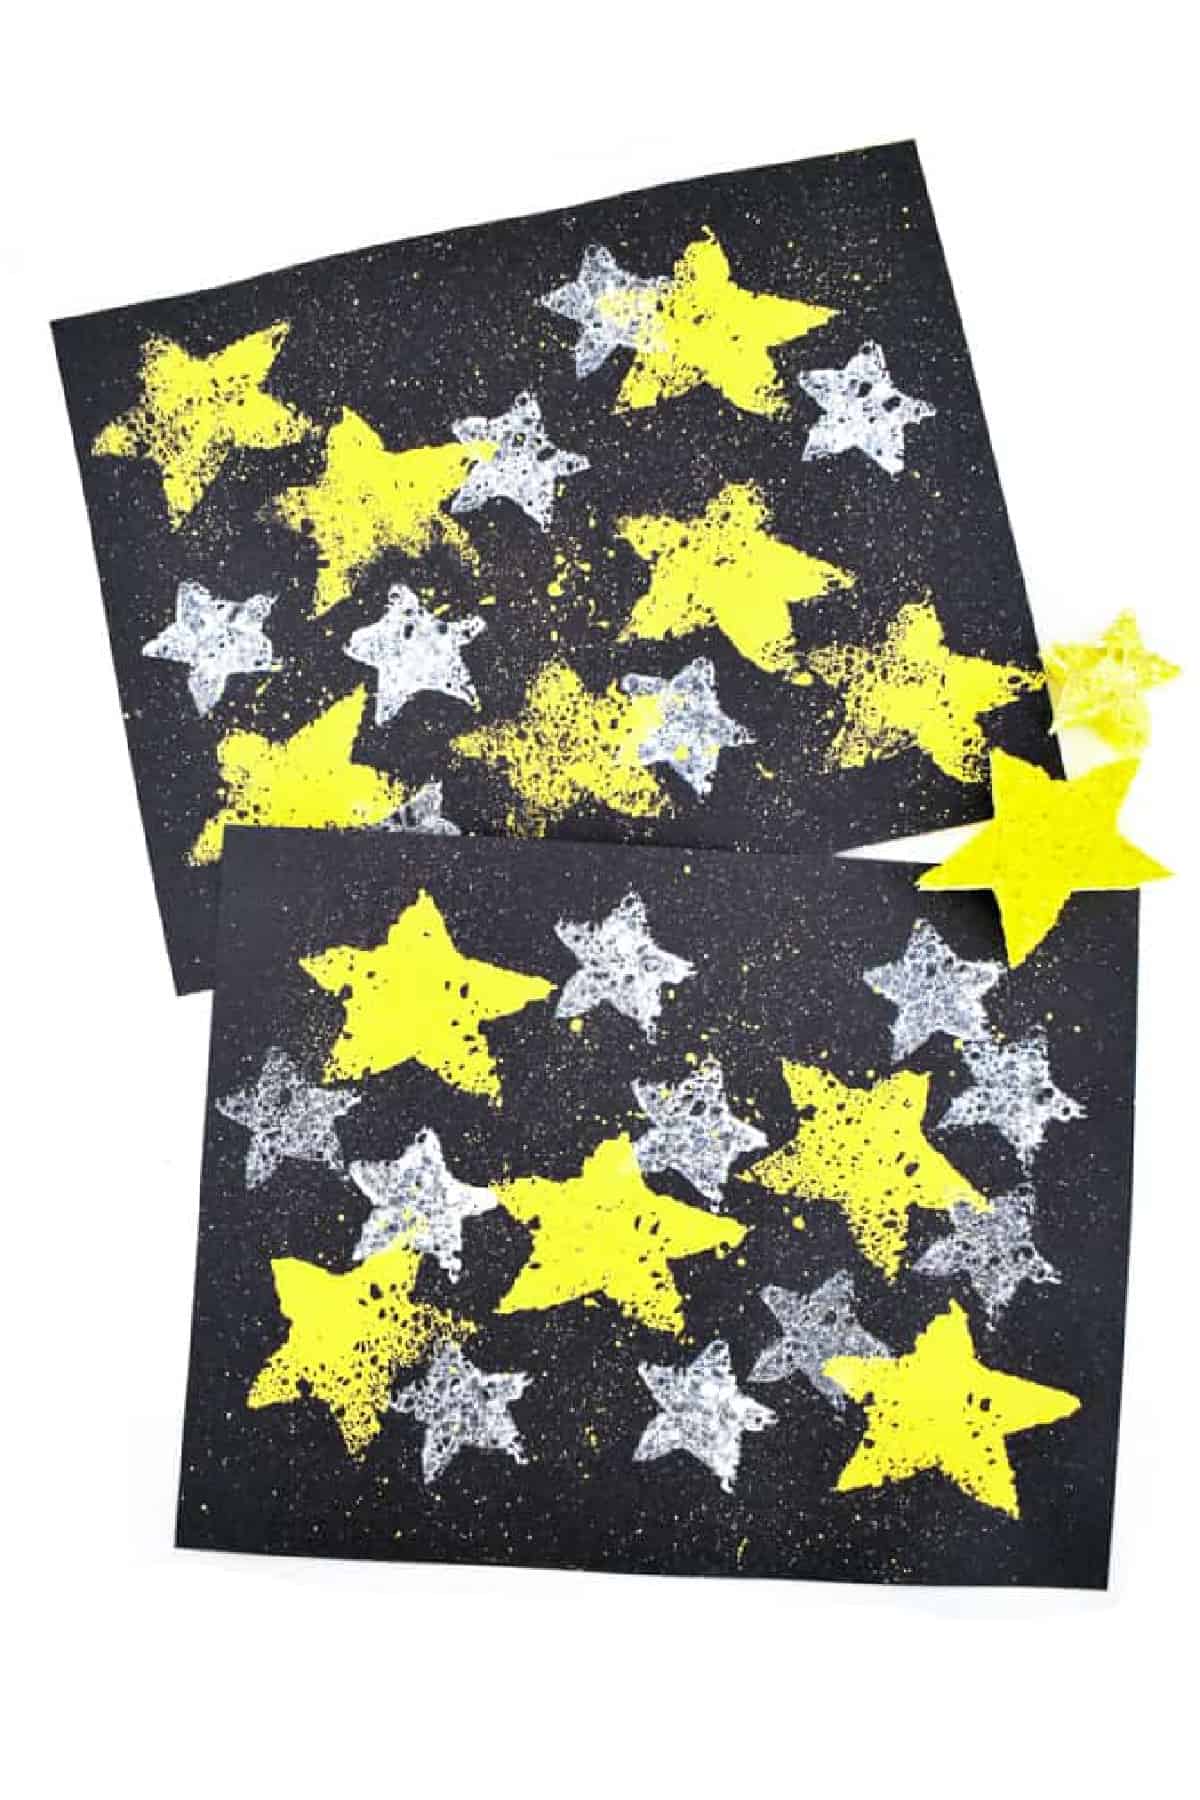 painting stars